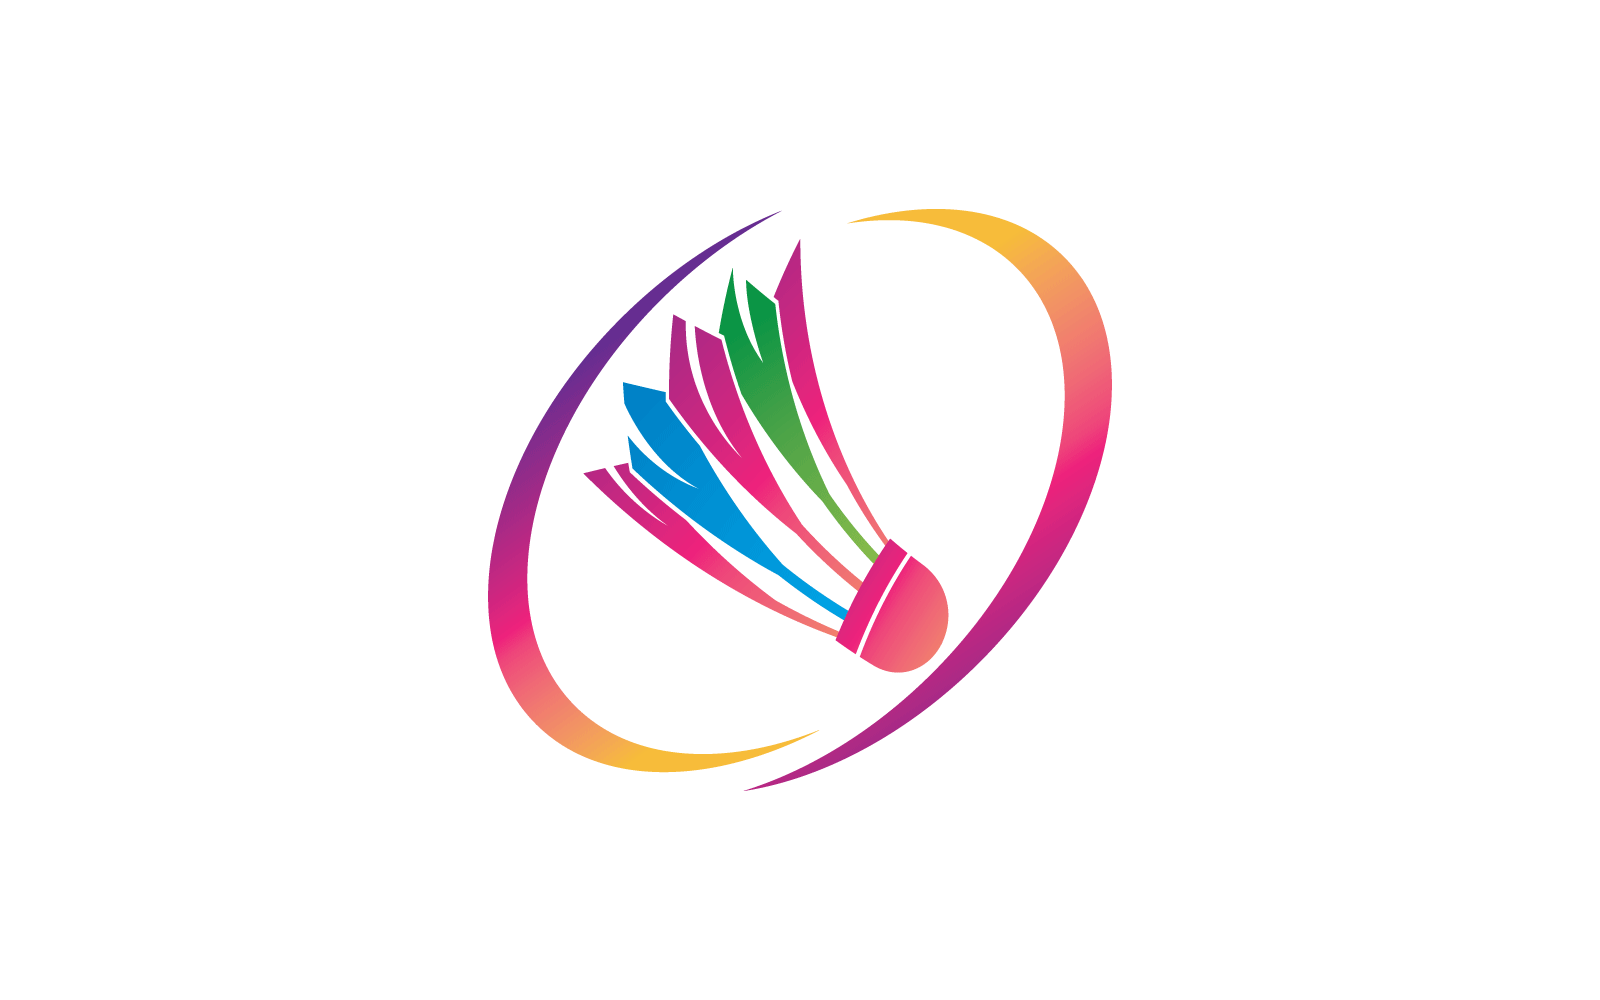 Suttle cock badminton logo illustration vector flat design